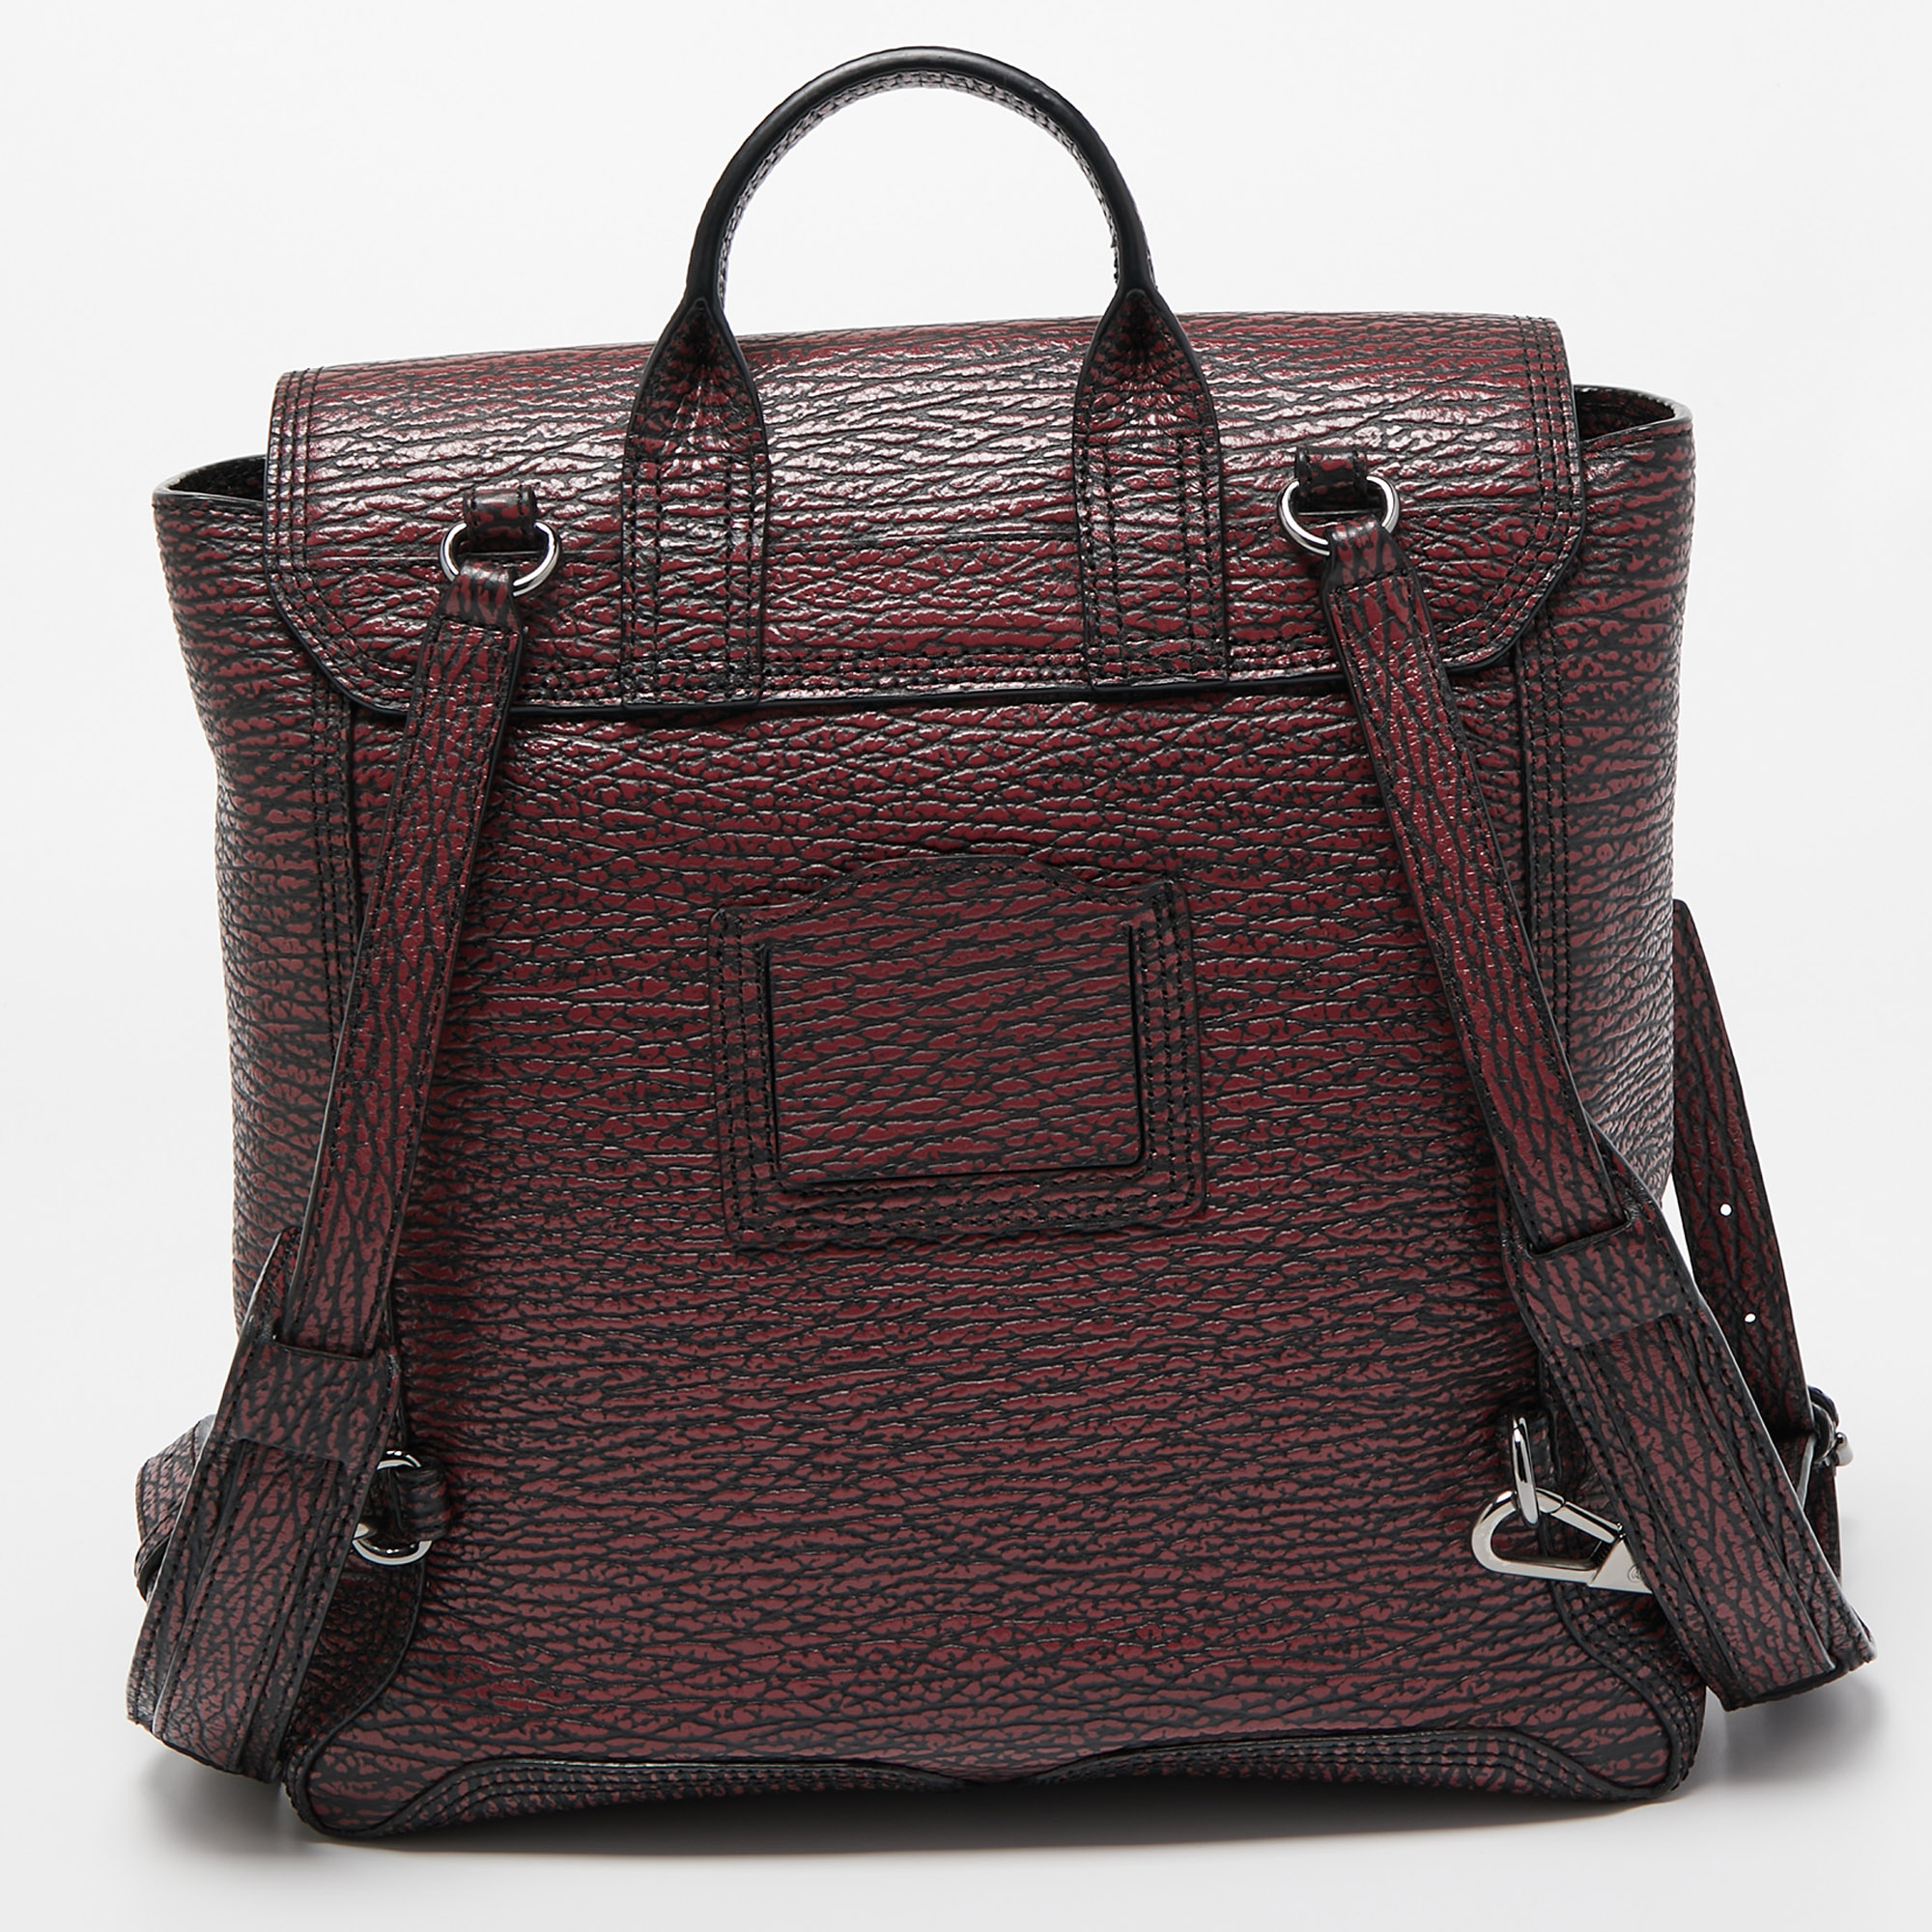 3.1 Phillip Lim Burgundy/Black Textured Leather Pashli Backpack